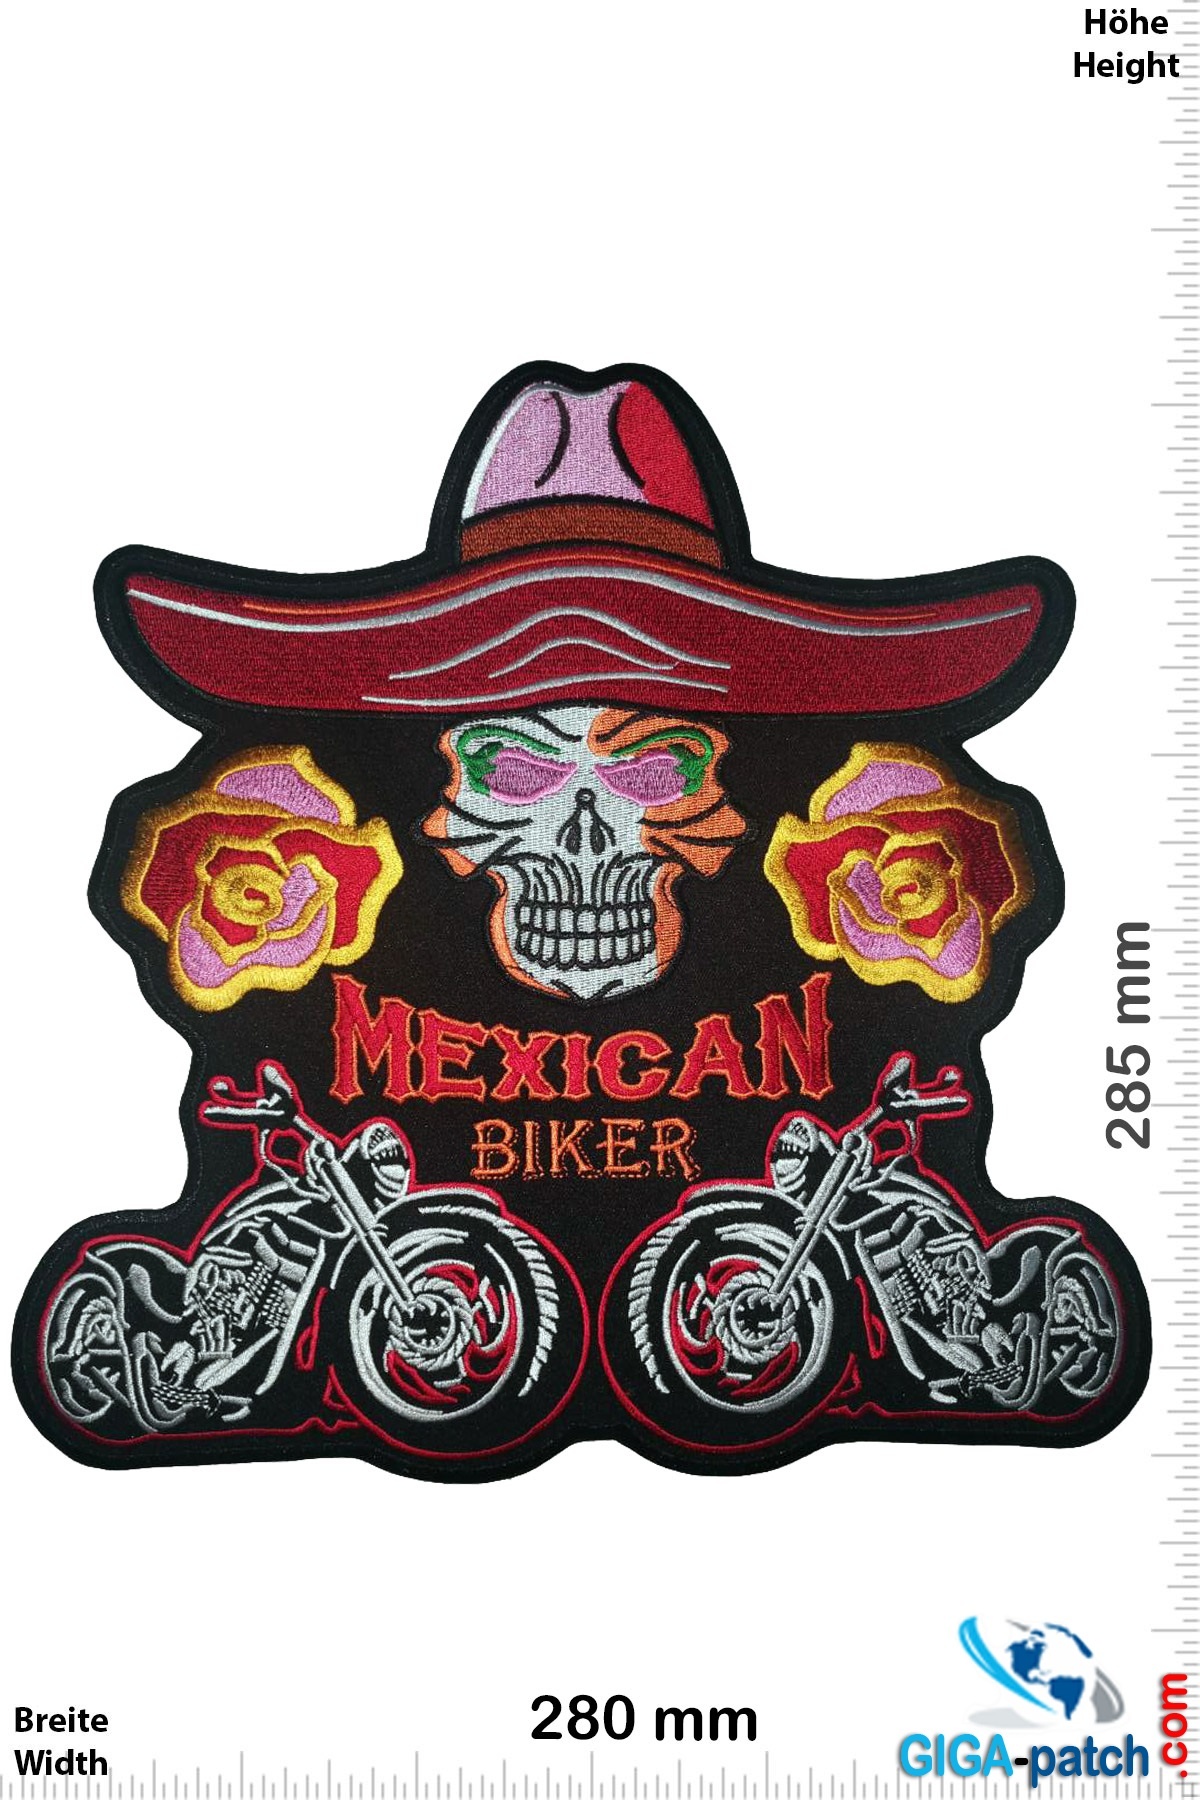 Biker Mexican Biker -28 cm